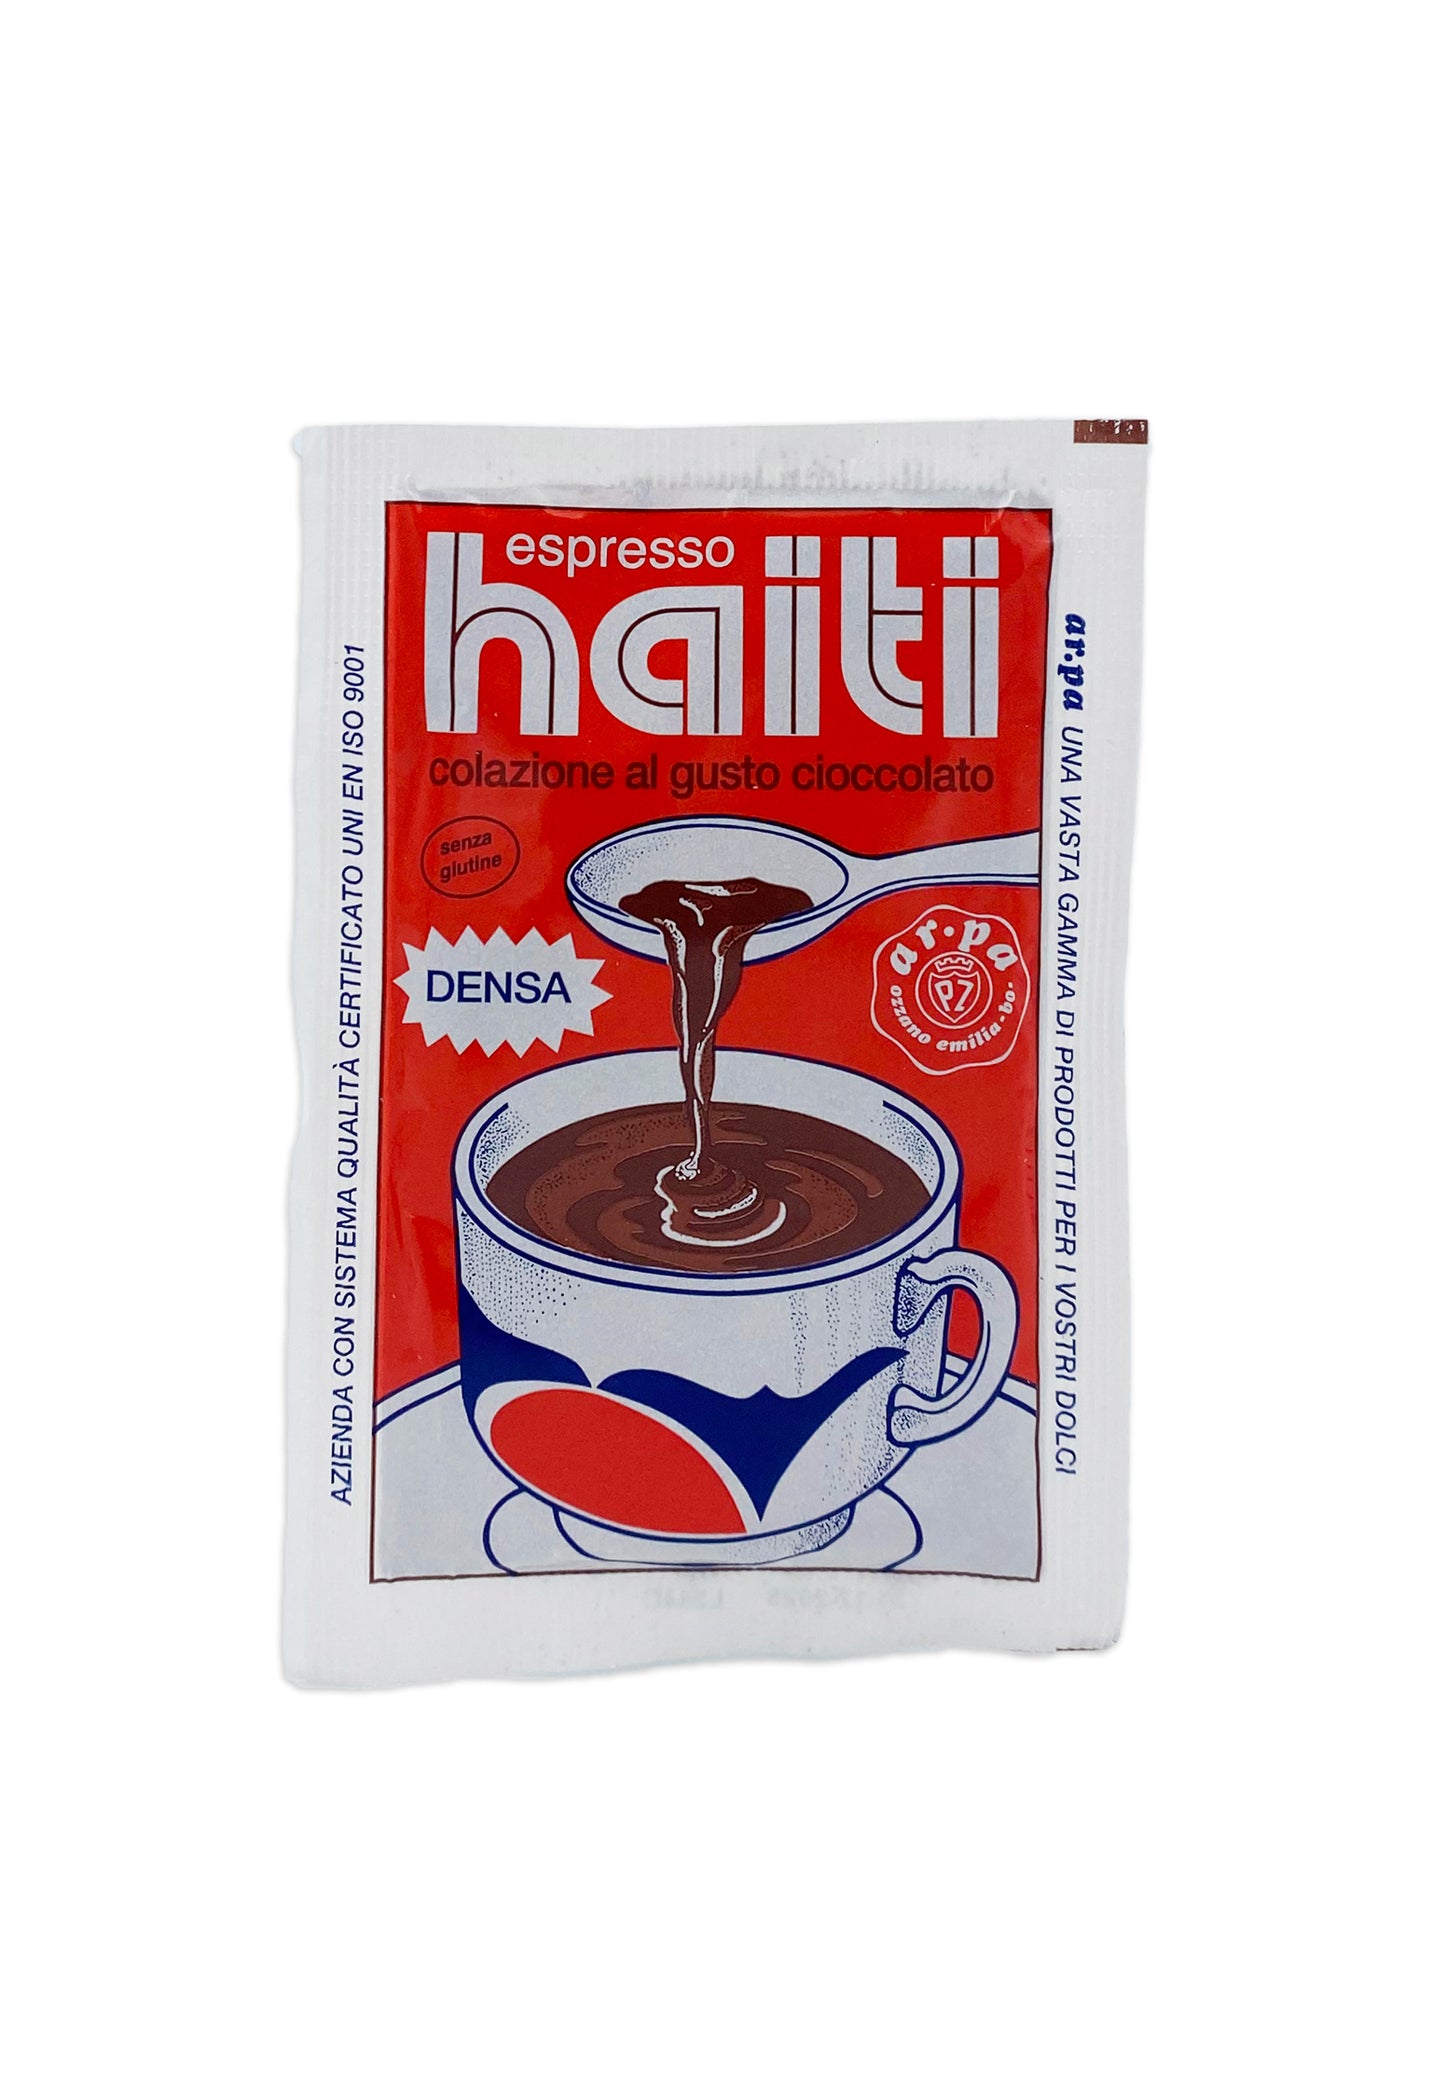 Espresso Haiti 28 g - Ar.pa Lieviti